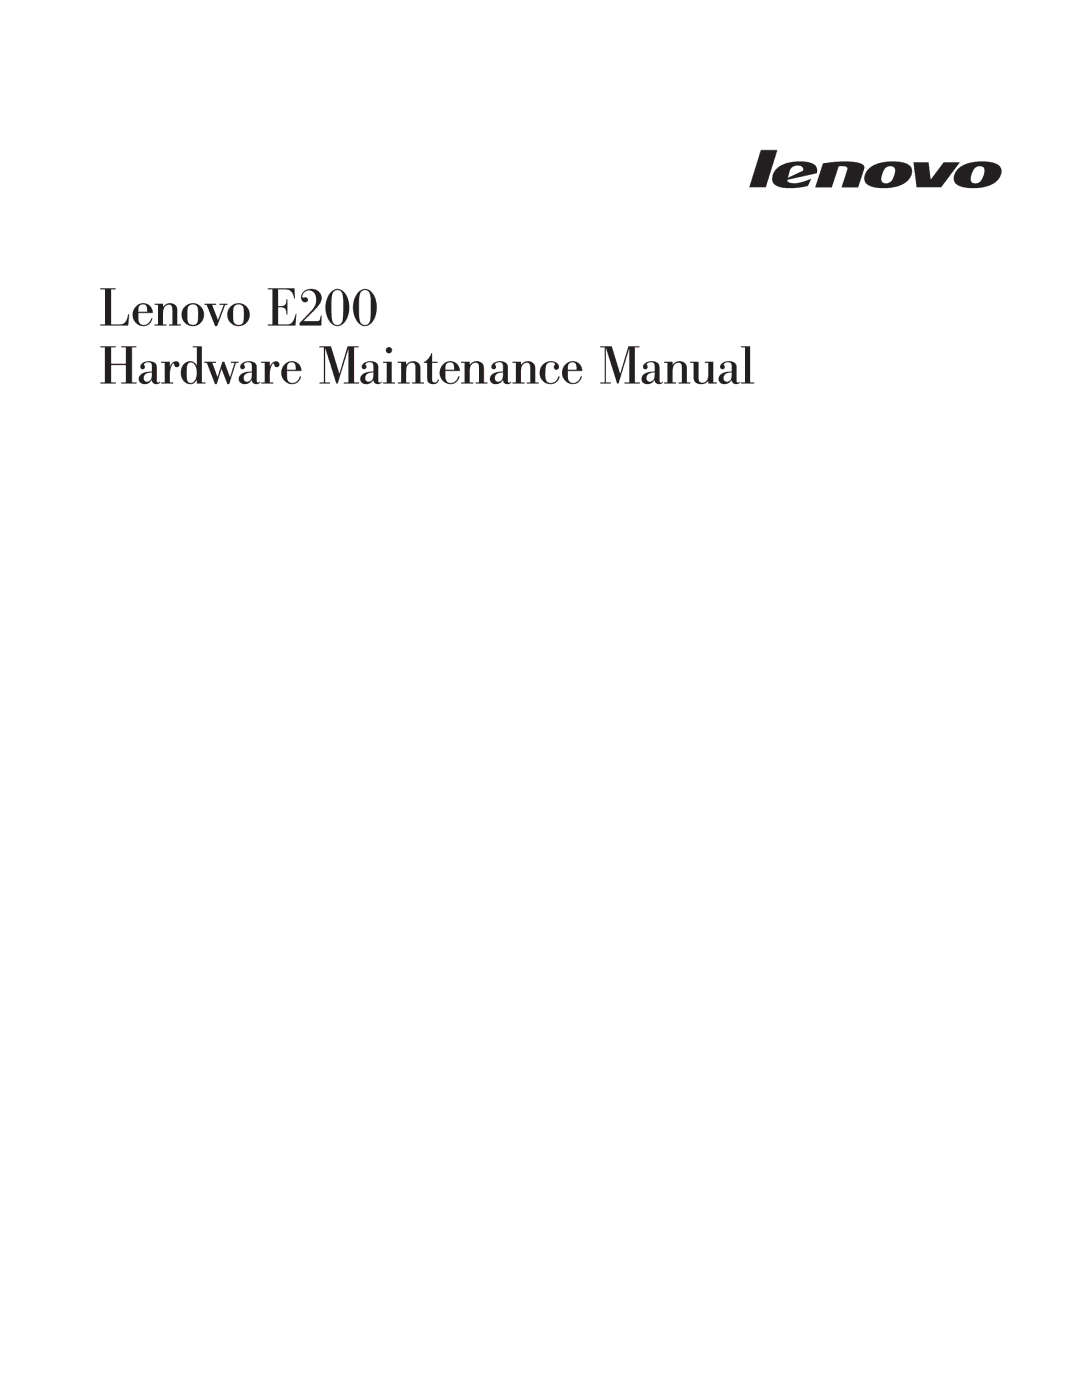 Lenovo manual Lenovo E200 Hardware Maintenance Manual 